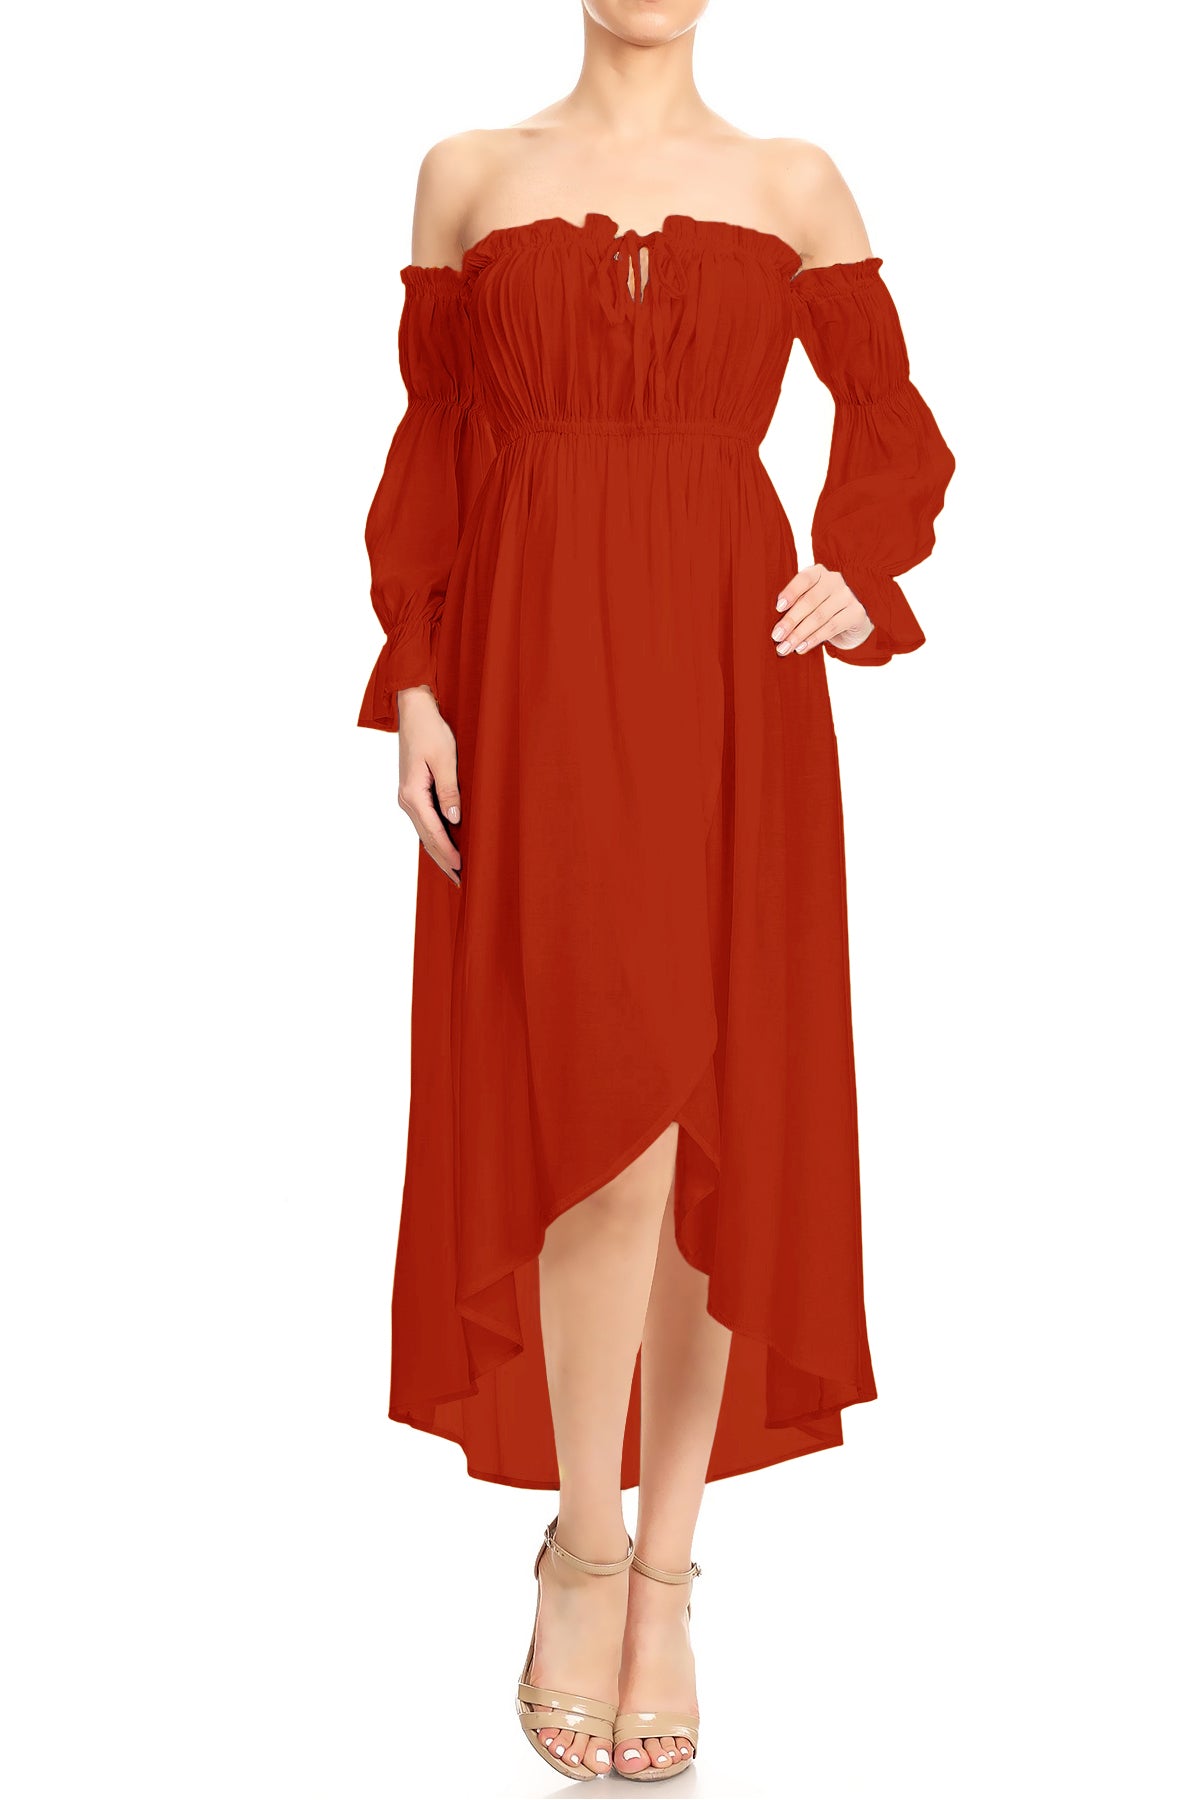 Casual Boho Long Sleeve Off Shoulder Renaissance Dress